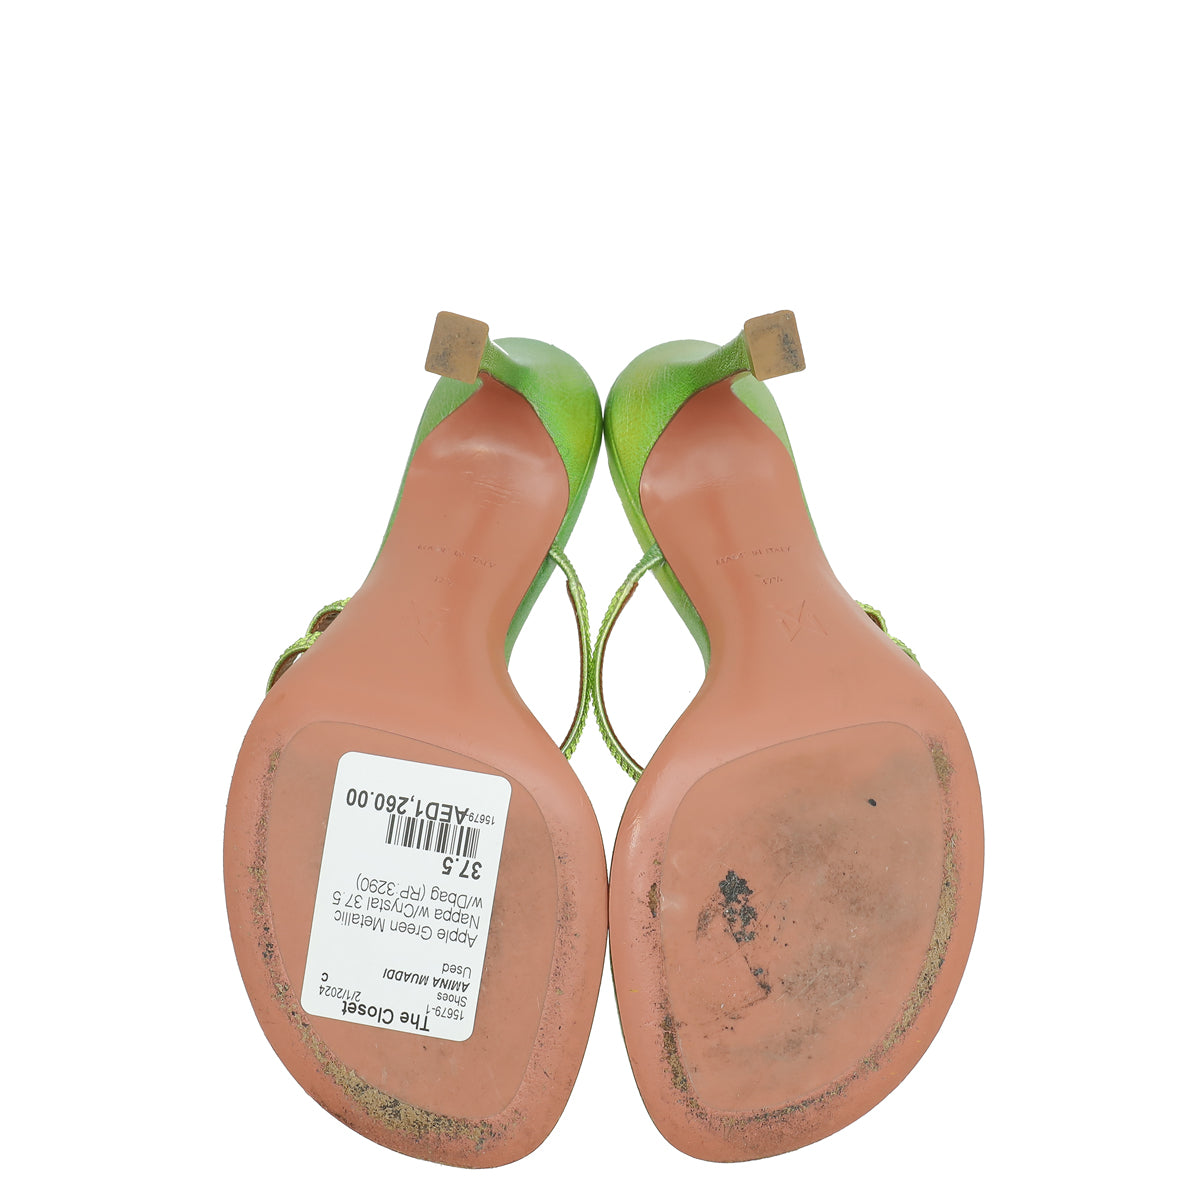 Amina Muaddi Apple Green Ami 105 Sandal 37.5